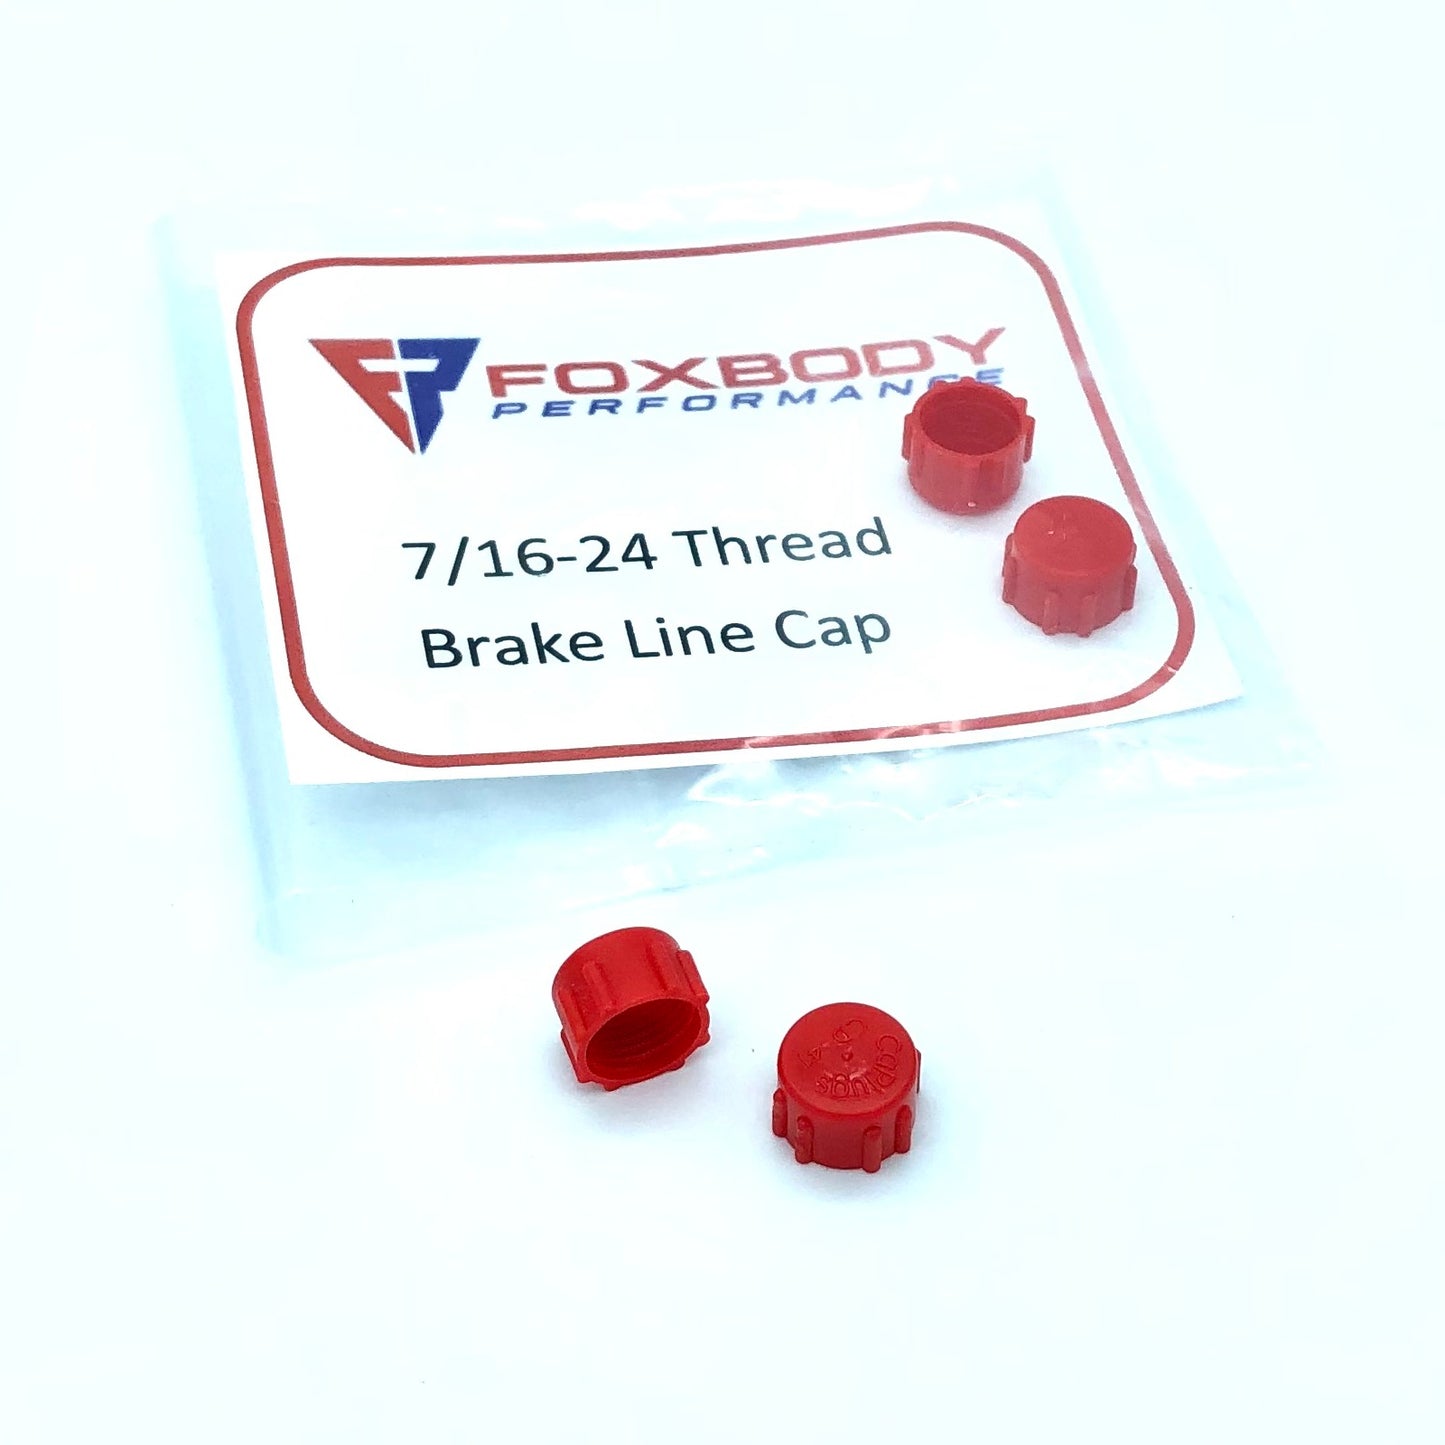 Brake Line Caps by CaPlug